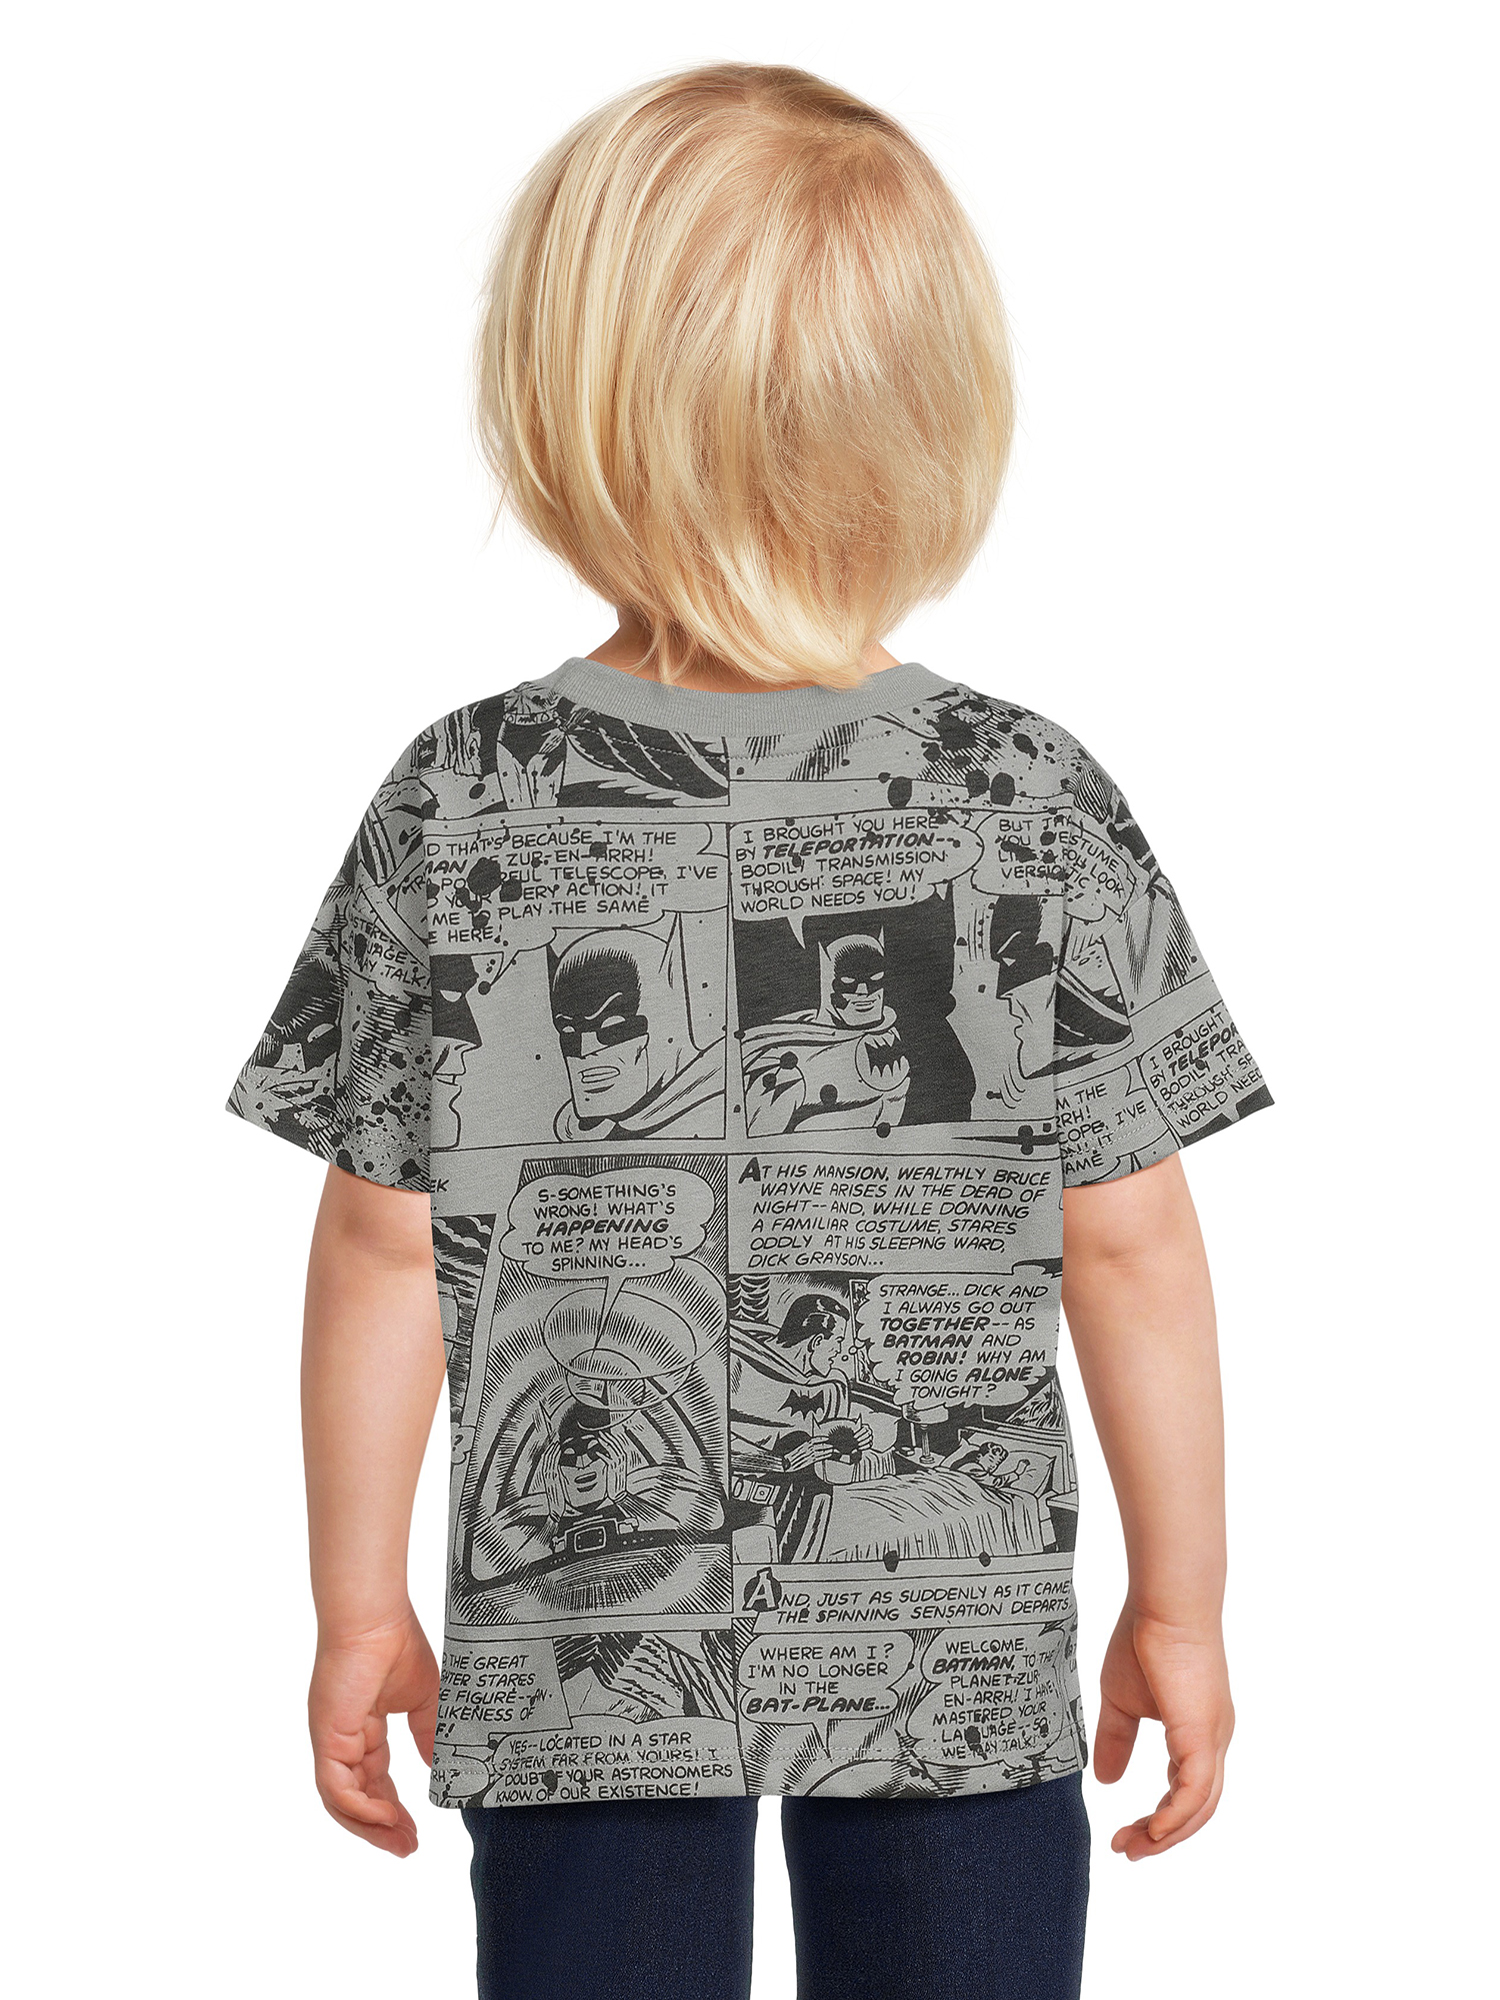 Batman Toddler Boys Comic Short Sleeve Crewneck T-Shirt, Sizes 12M-5T - image 4 of 7